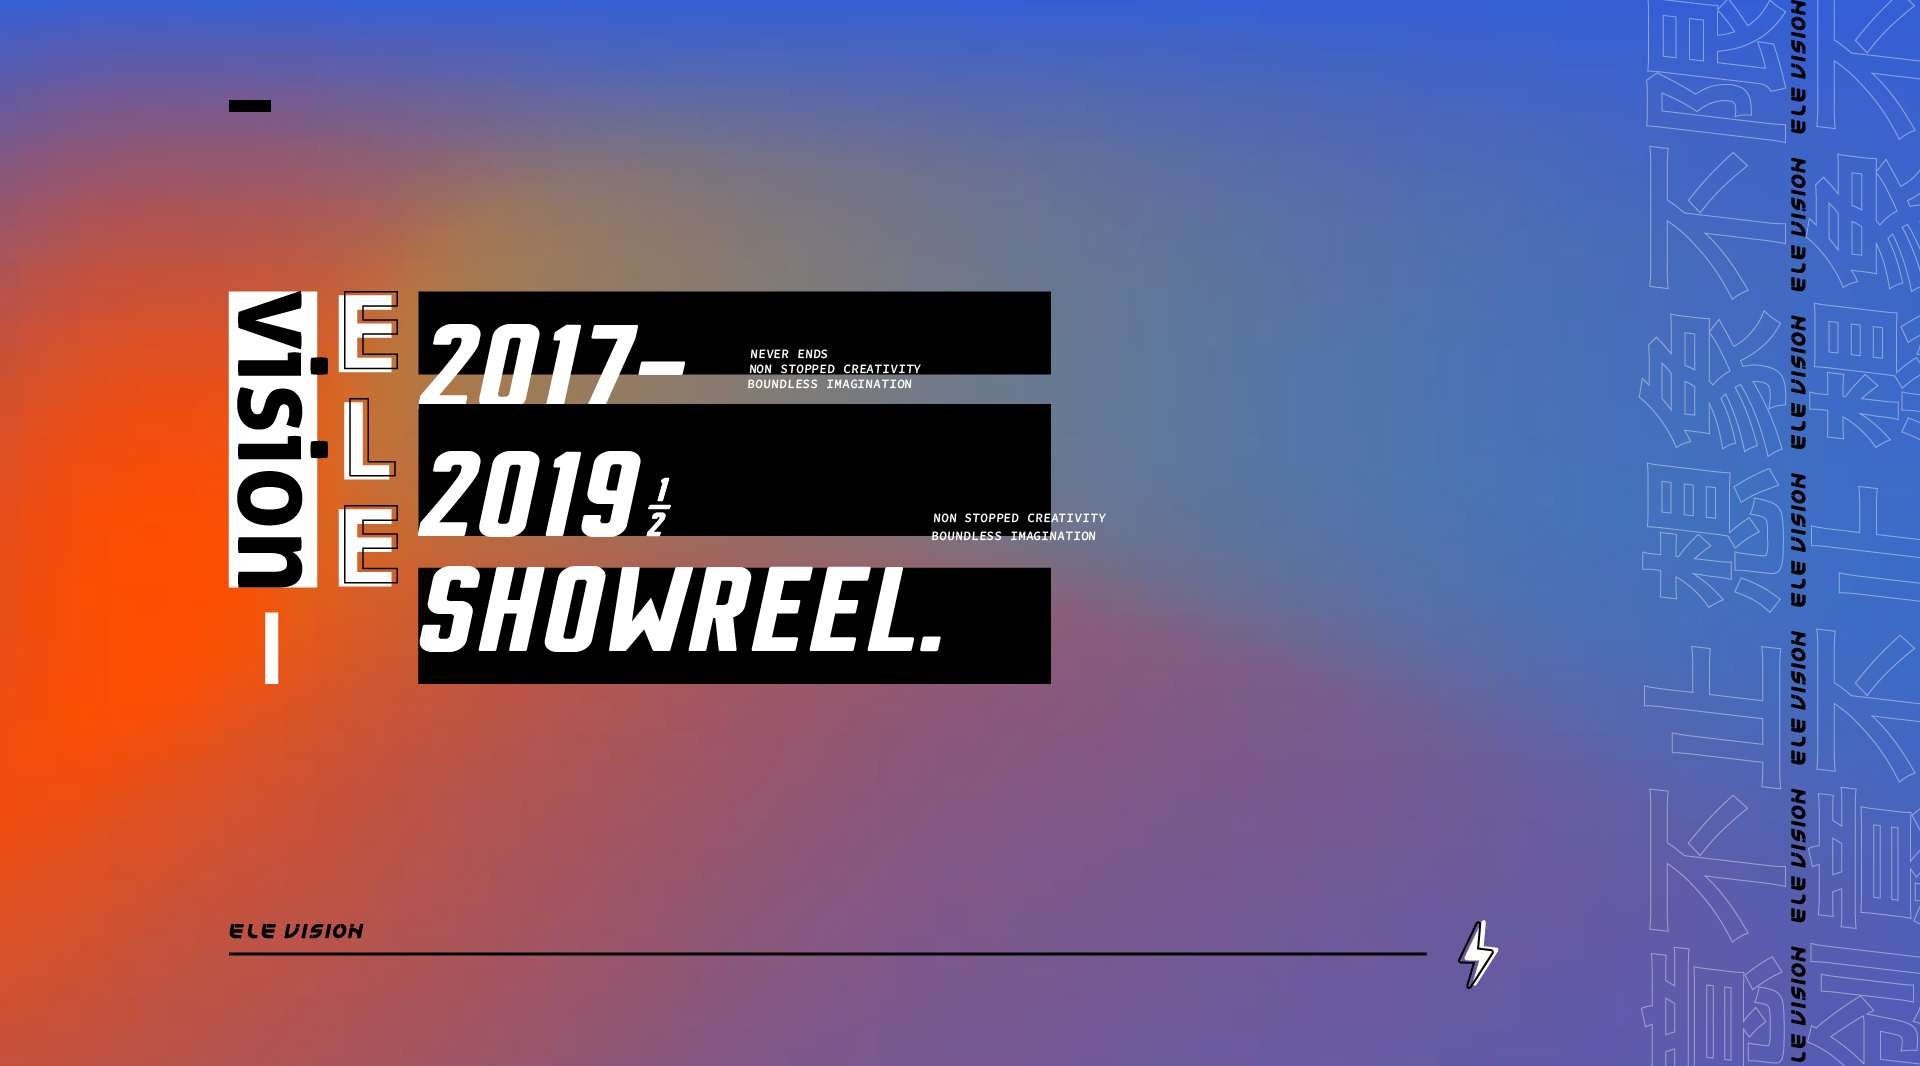 ELEVISION 2017-2019 SHOWREEL 万象映画作品混剪 